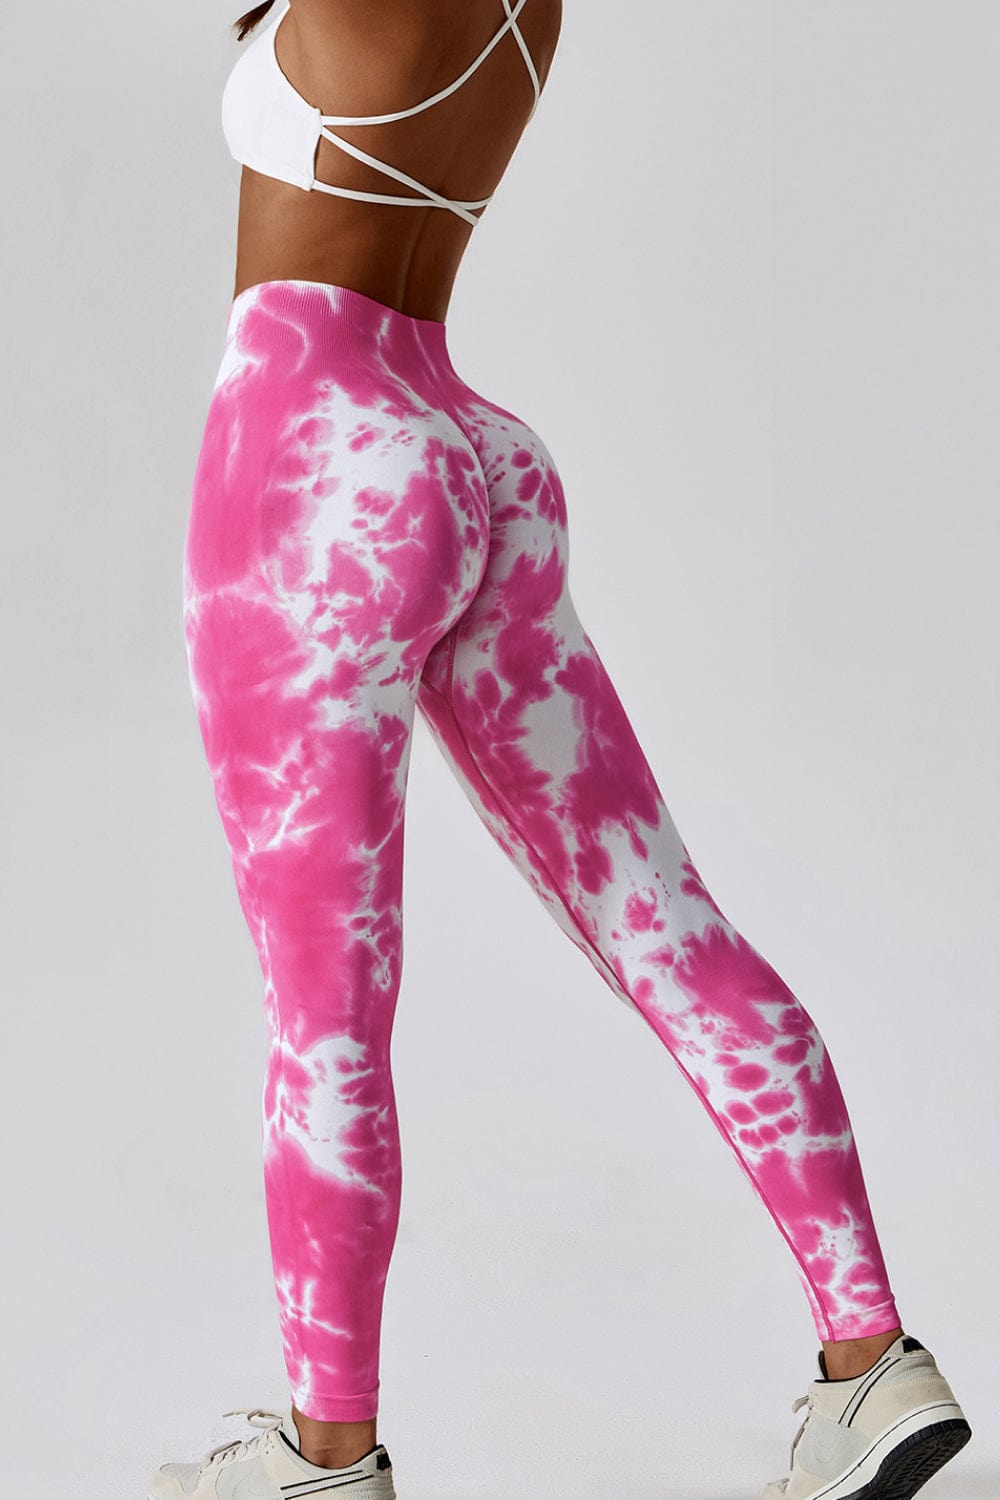 High Waist Tie-Dye Long Sports Pants Active Wear Trendsi Fuchsia Pink / S